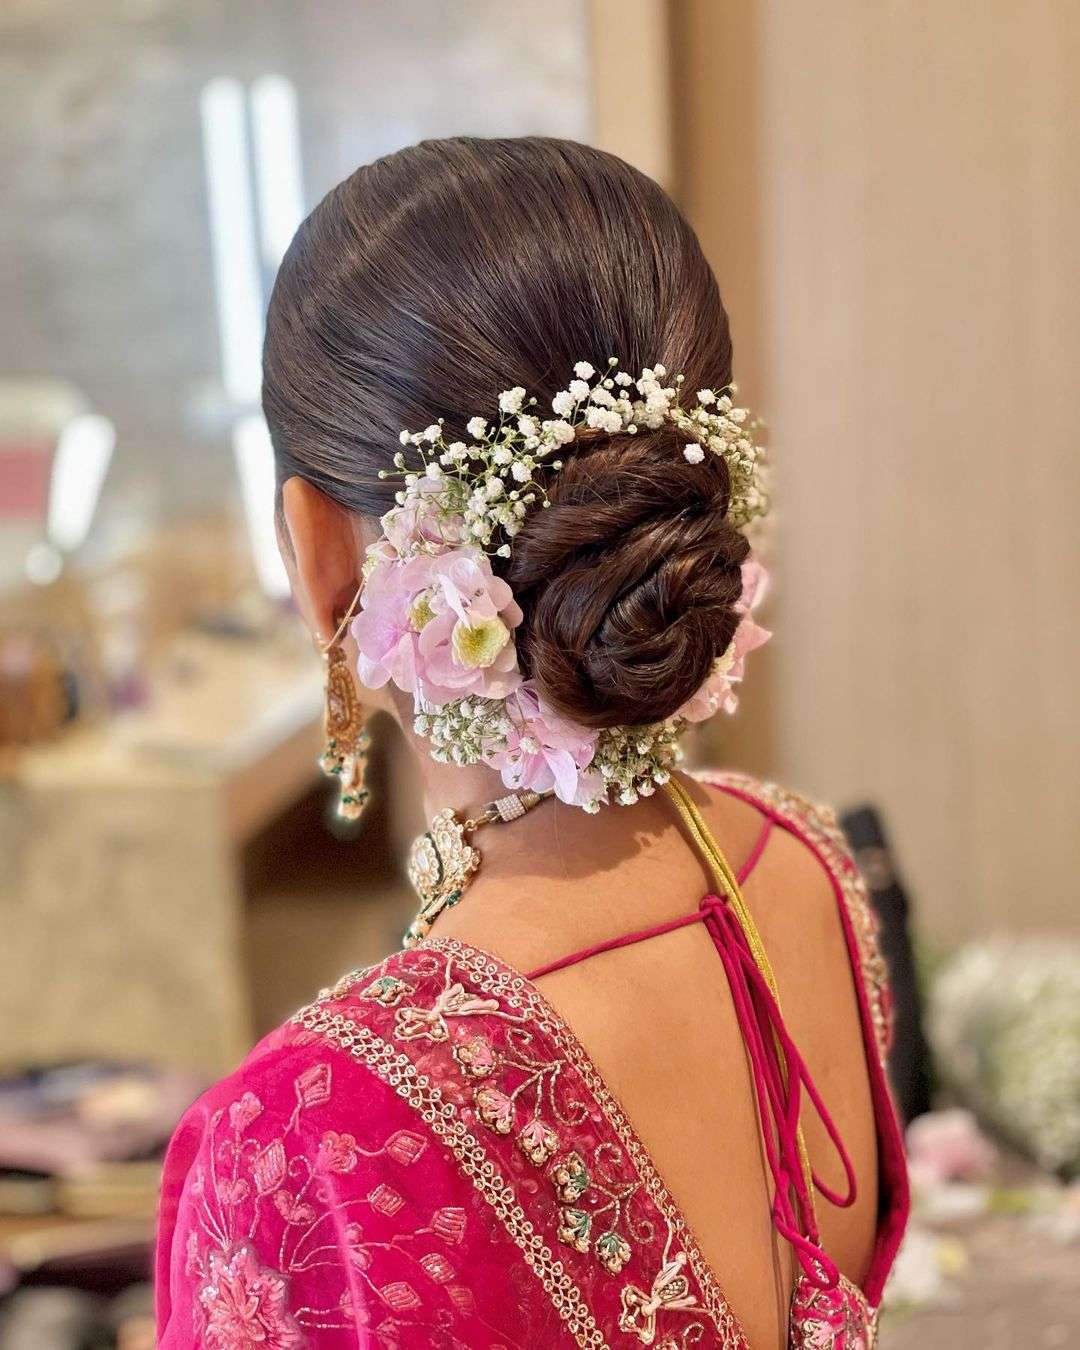 Unic Bridal - Wedding Modern Hair Styles Messy Bun type... | Facebook